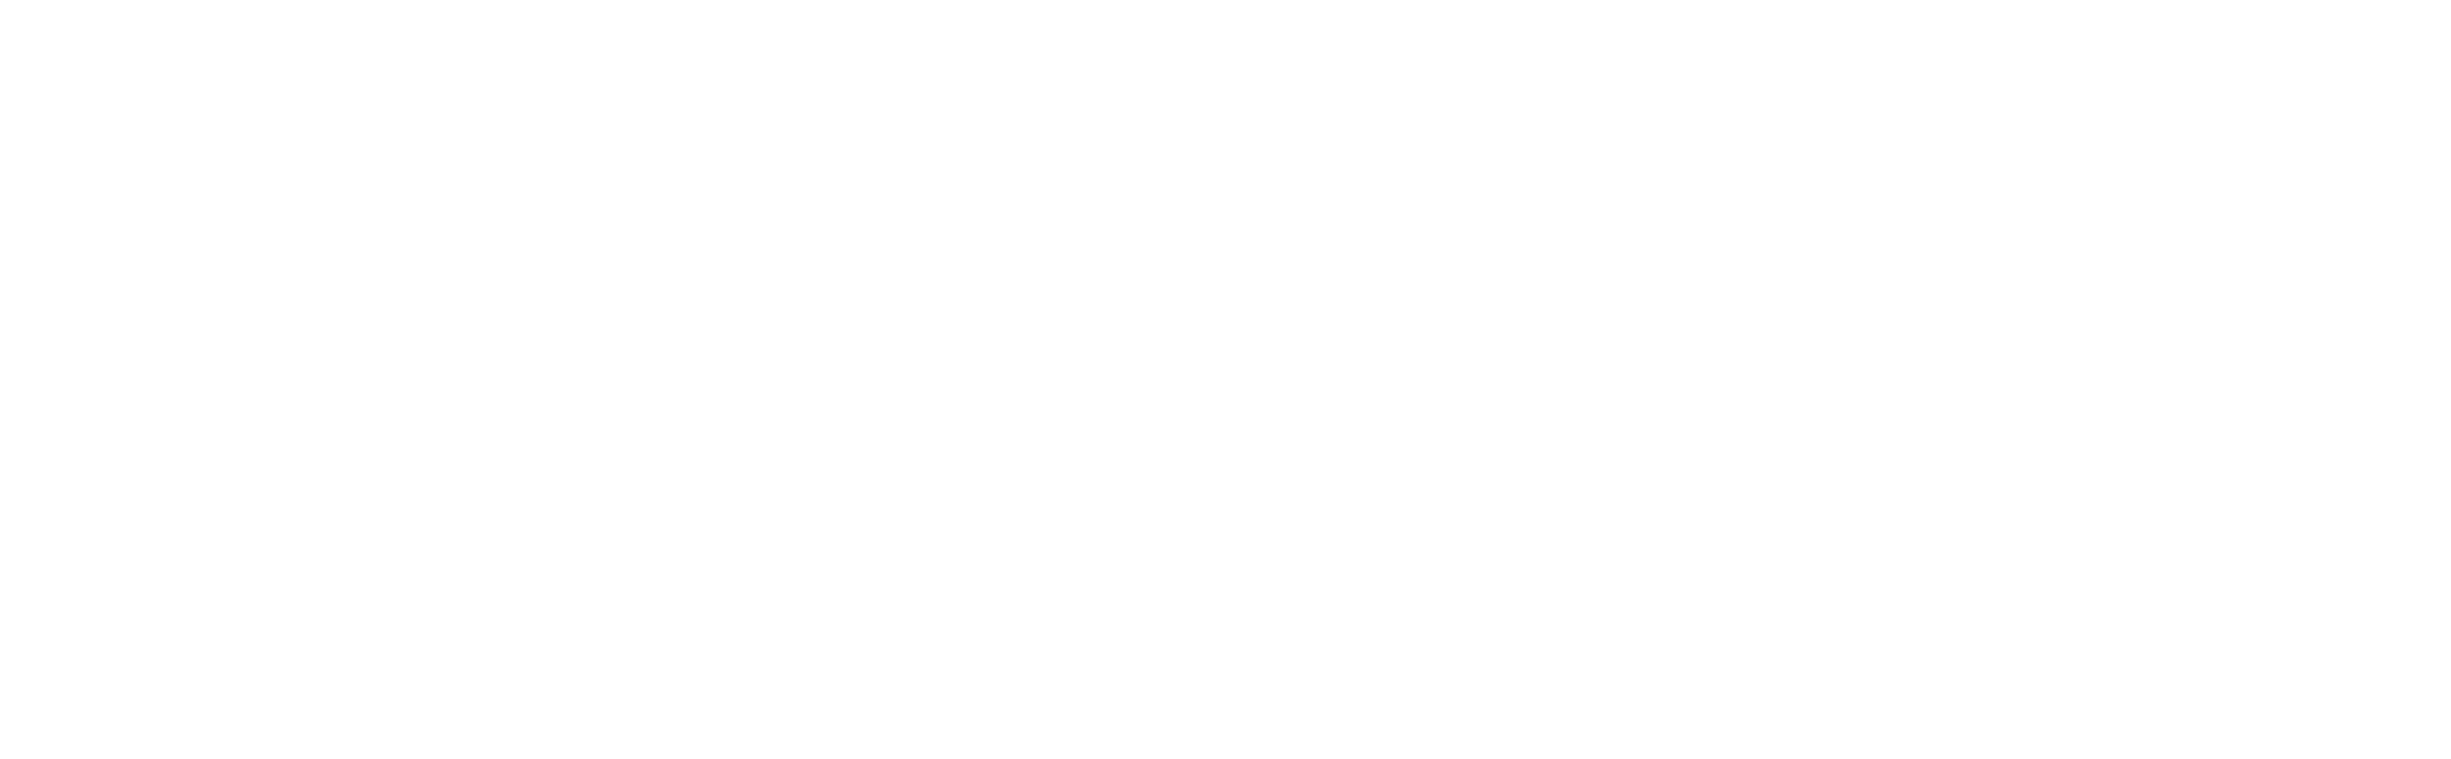 Beesy logo - rapport d'activité